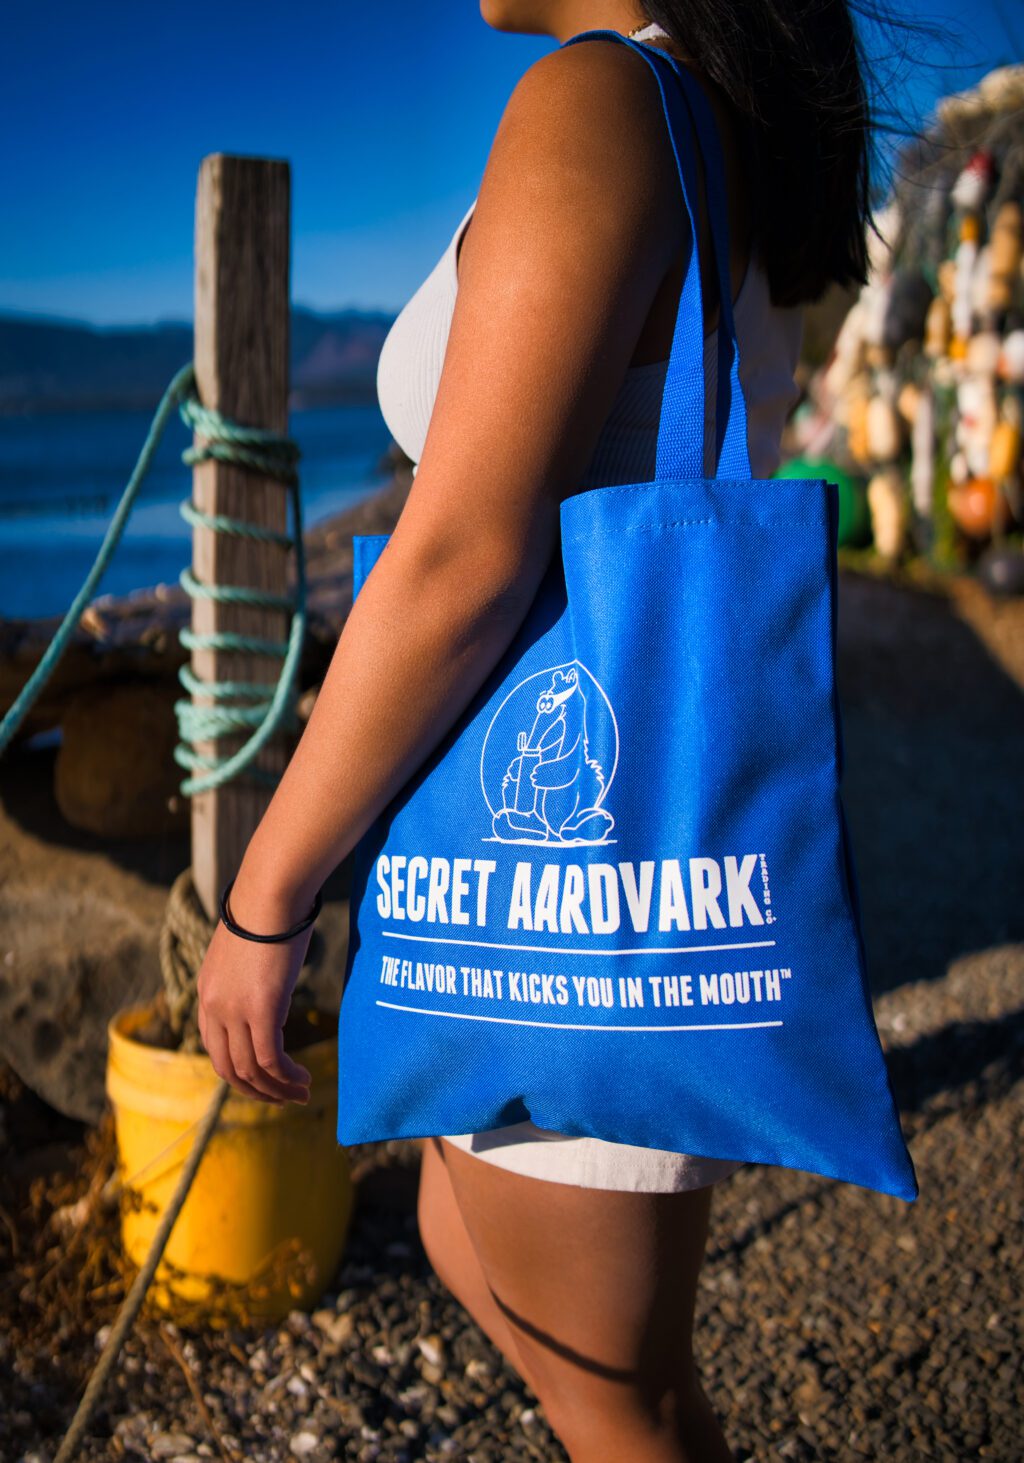 a woman holding a Secret Aardvark tote bag.